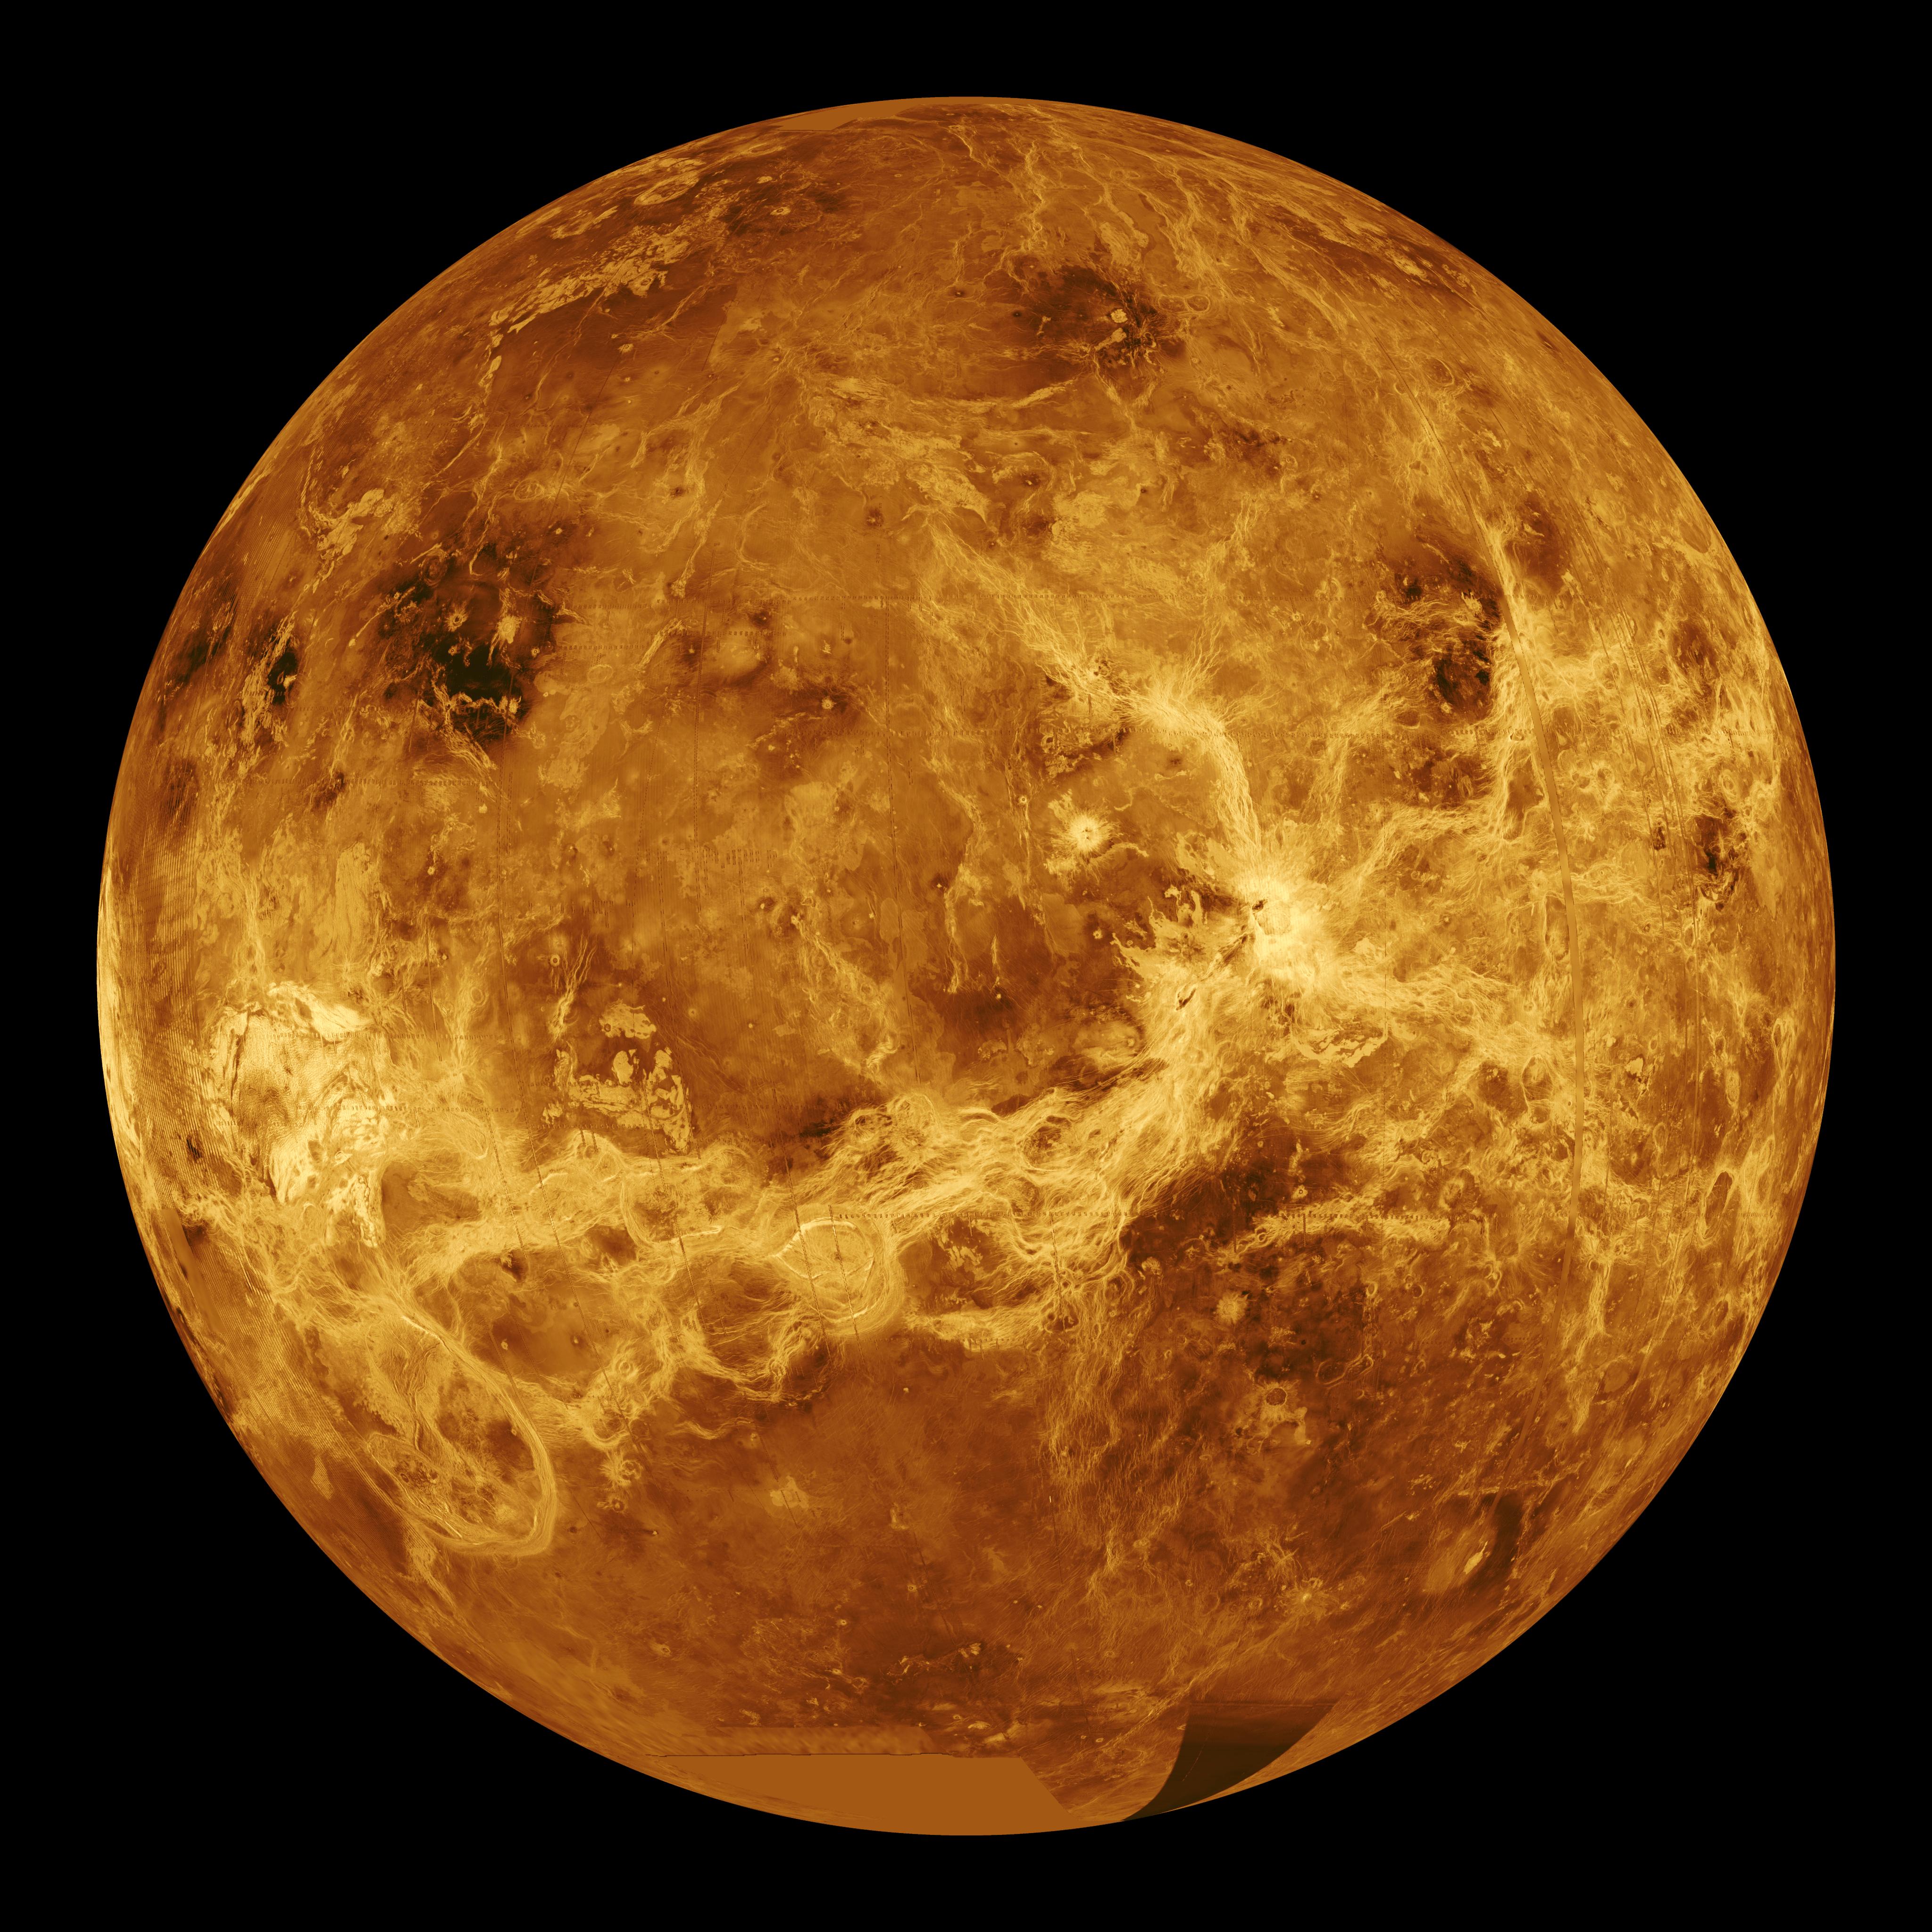 A close-up of the planet Venus.